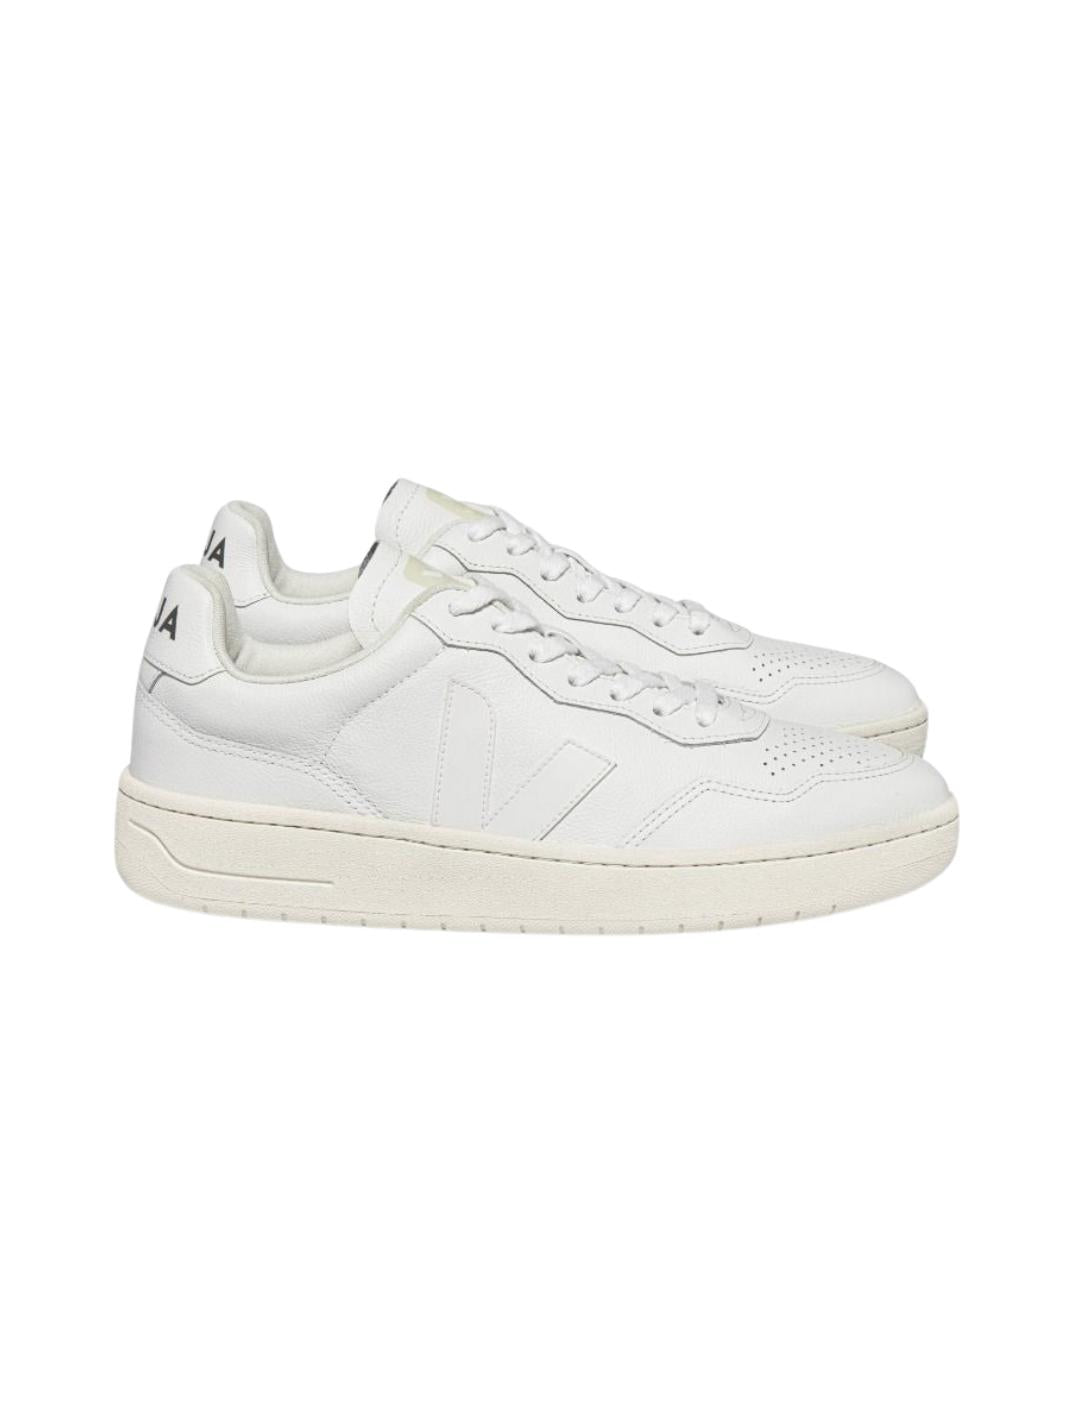 Veja Shoes Sneakers | V-90 Extra White